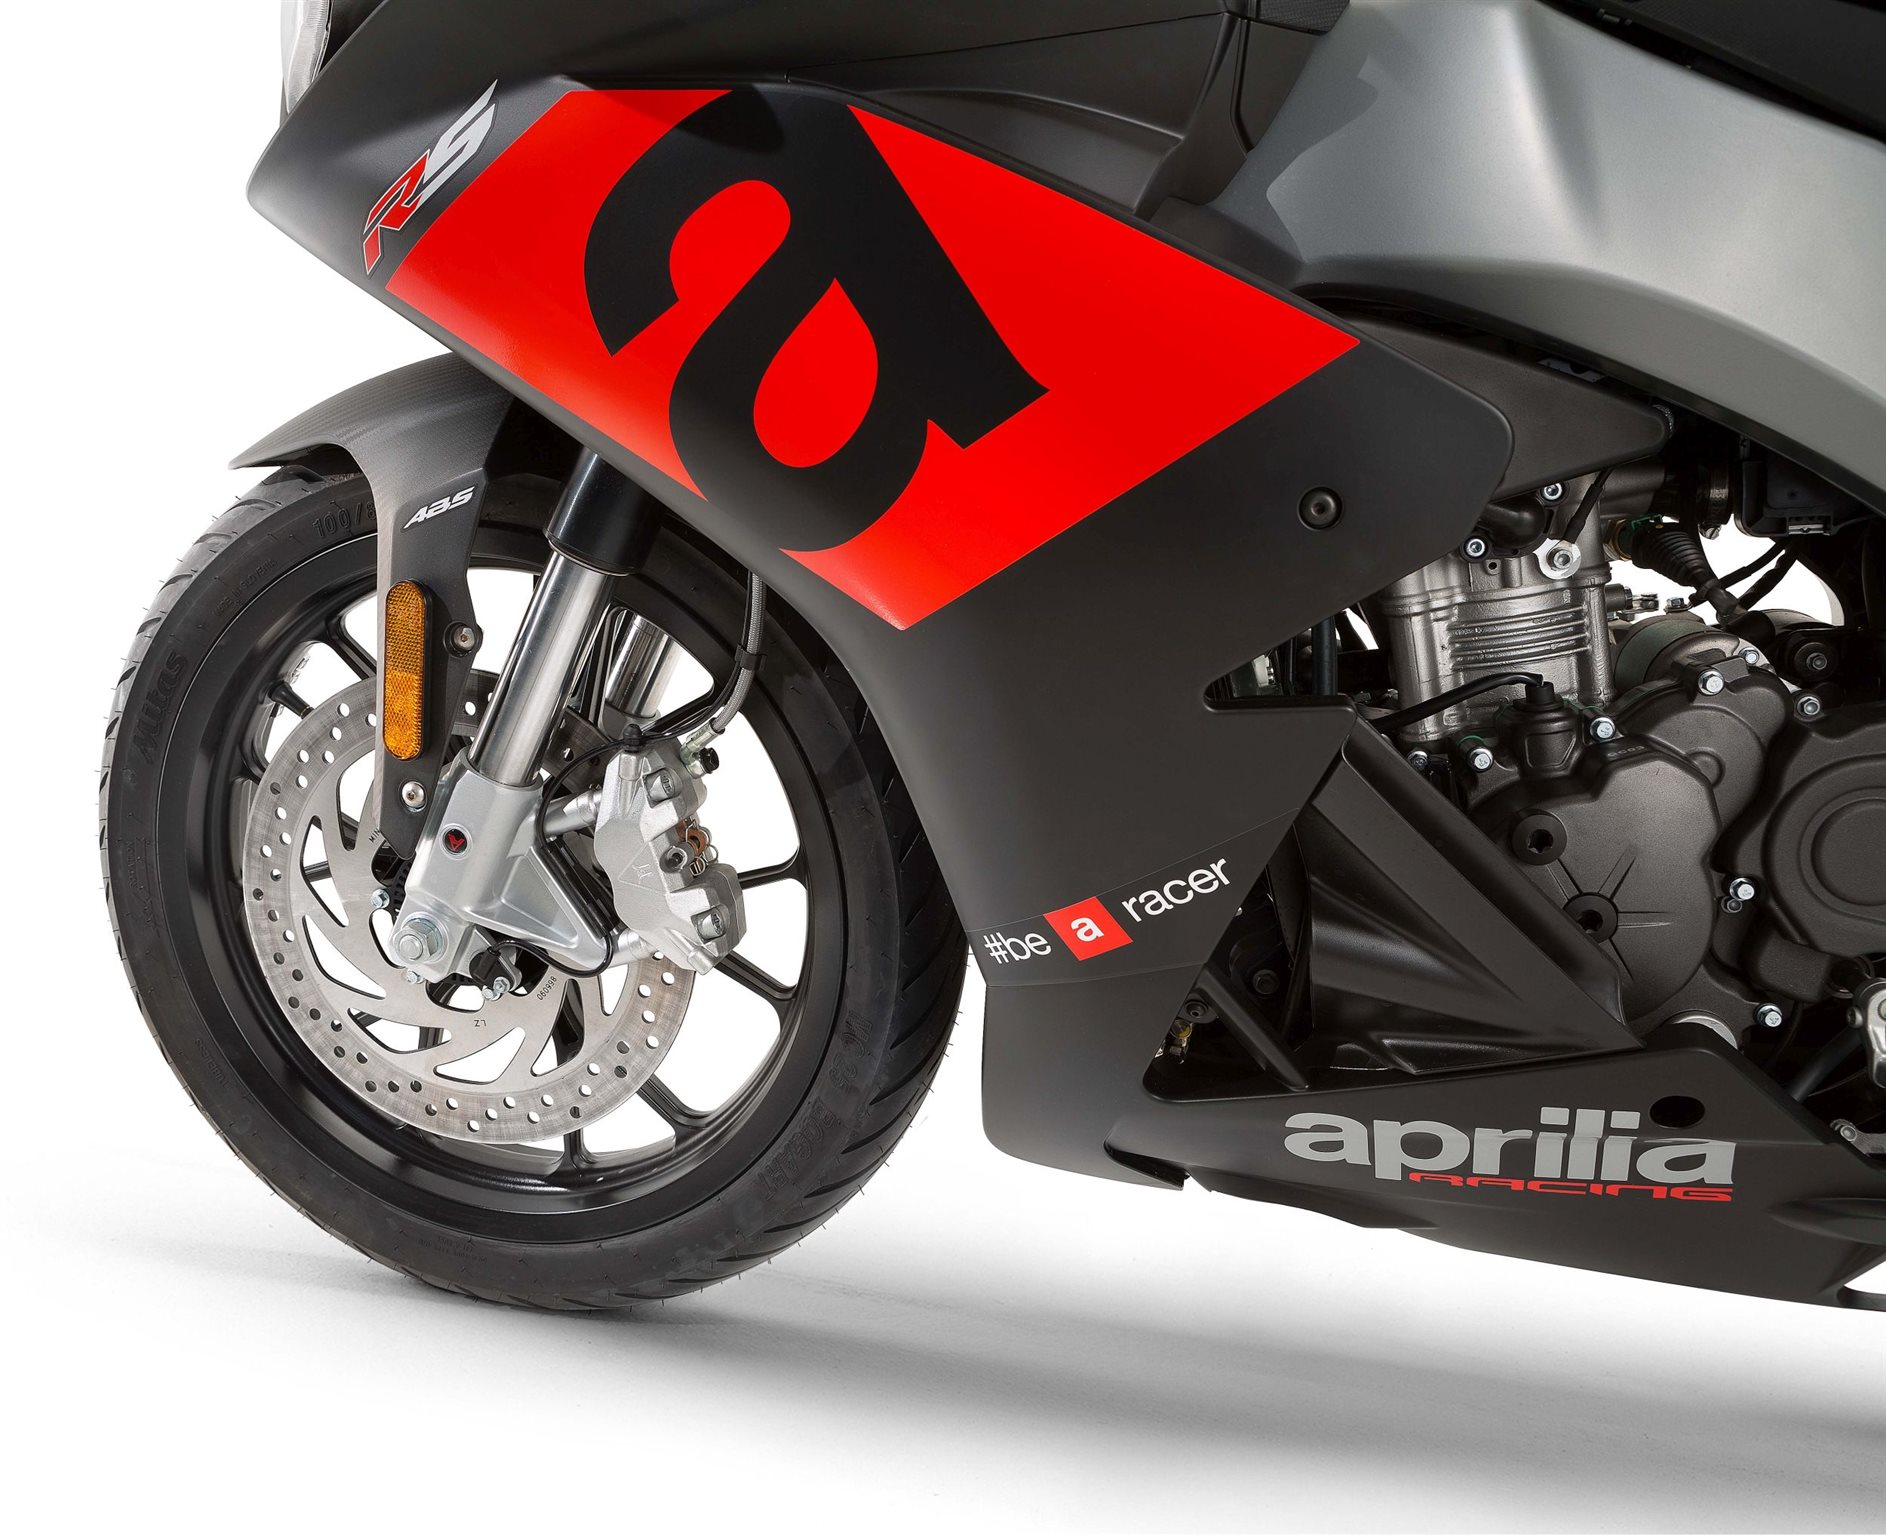 Aprilia RS 125 ABS Motorrad, neu